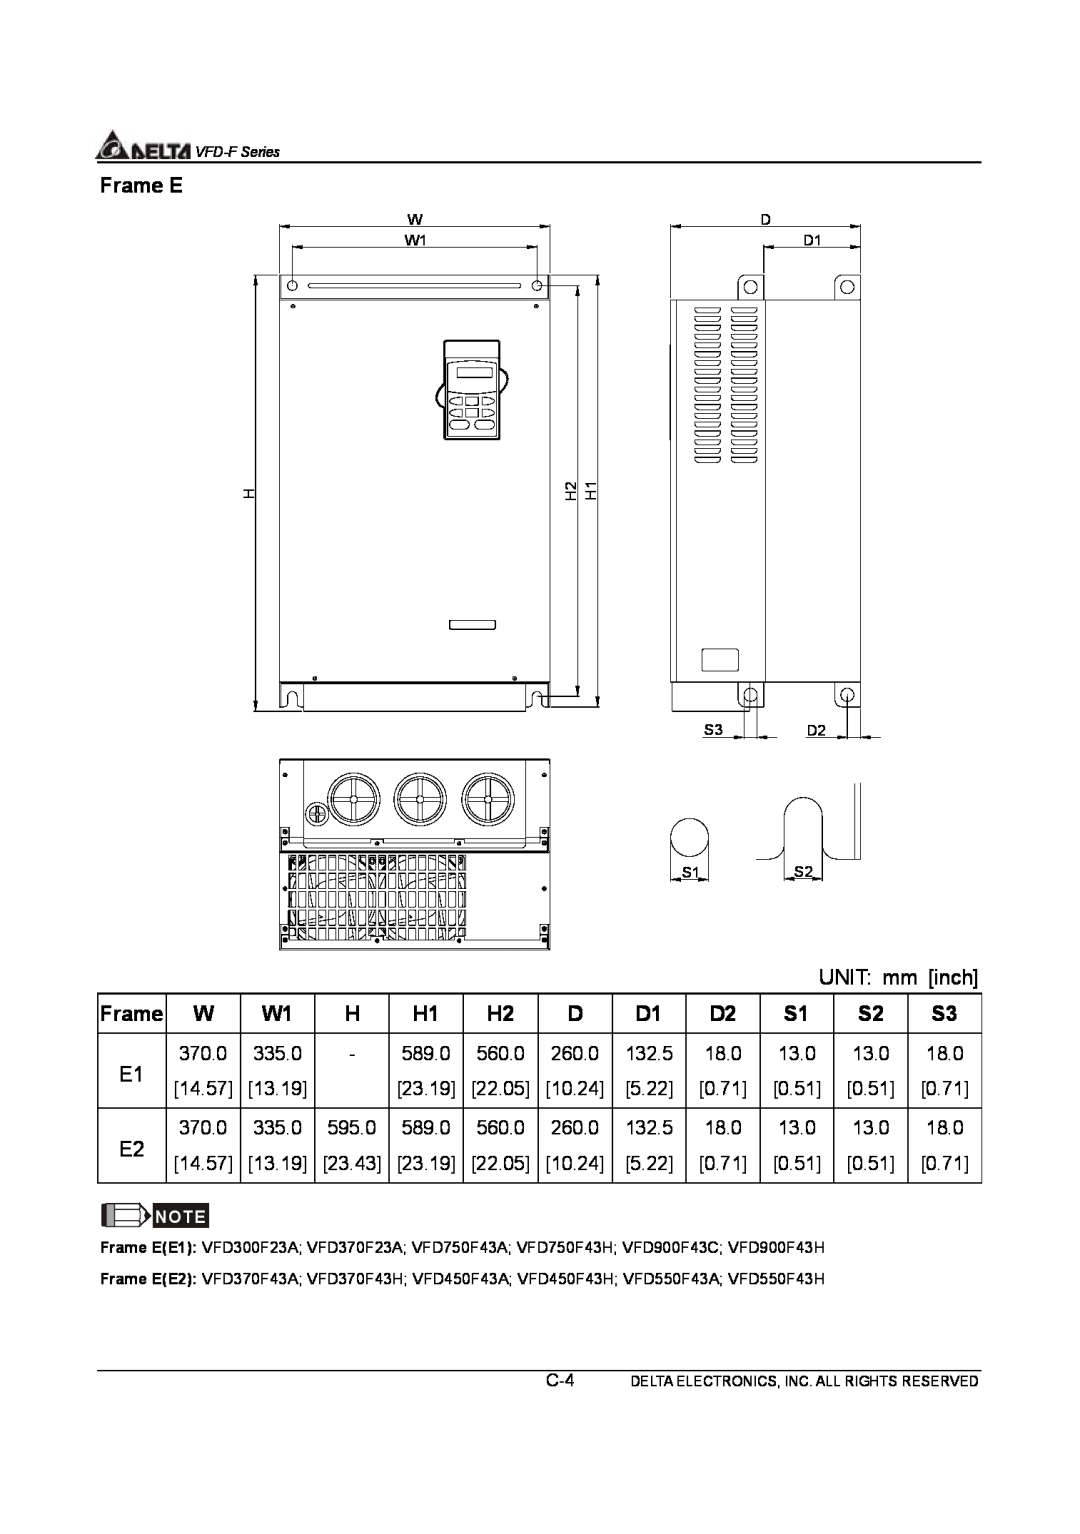 Delta Electronics VFD-F Series manual Frame E, W W1 H1, D D1, S3 S1, D2 S2 